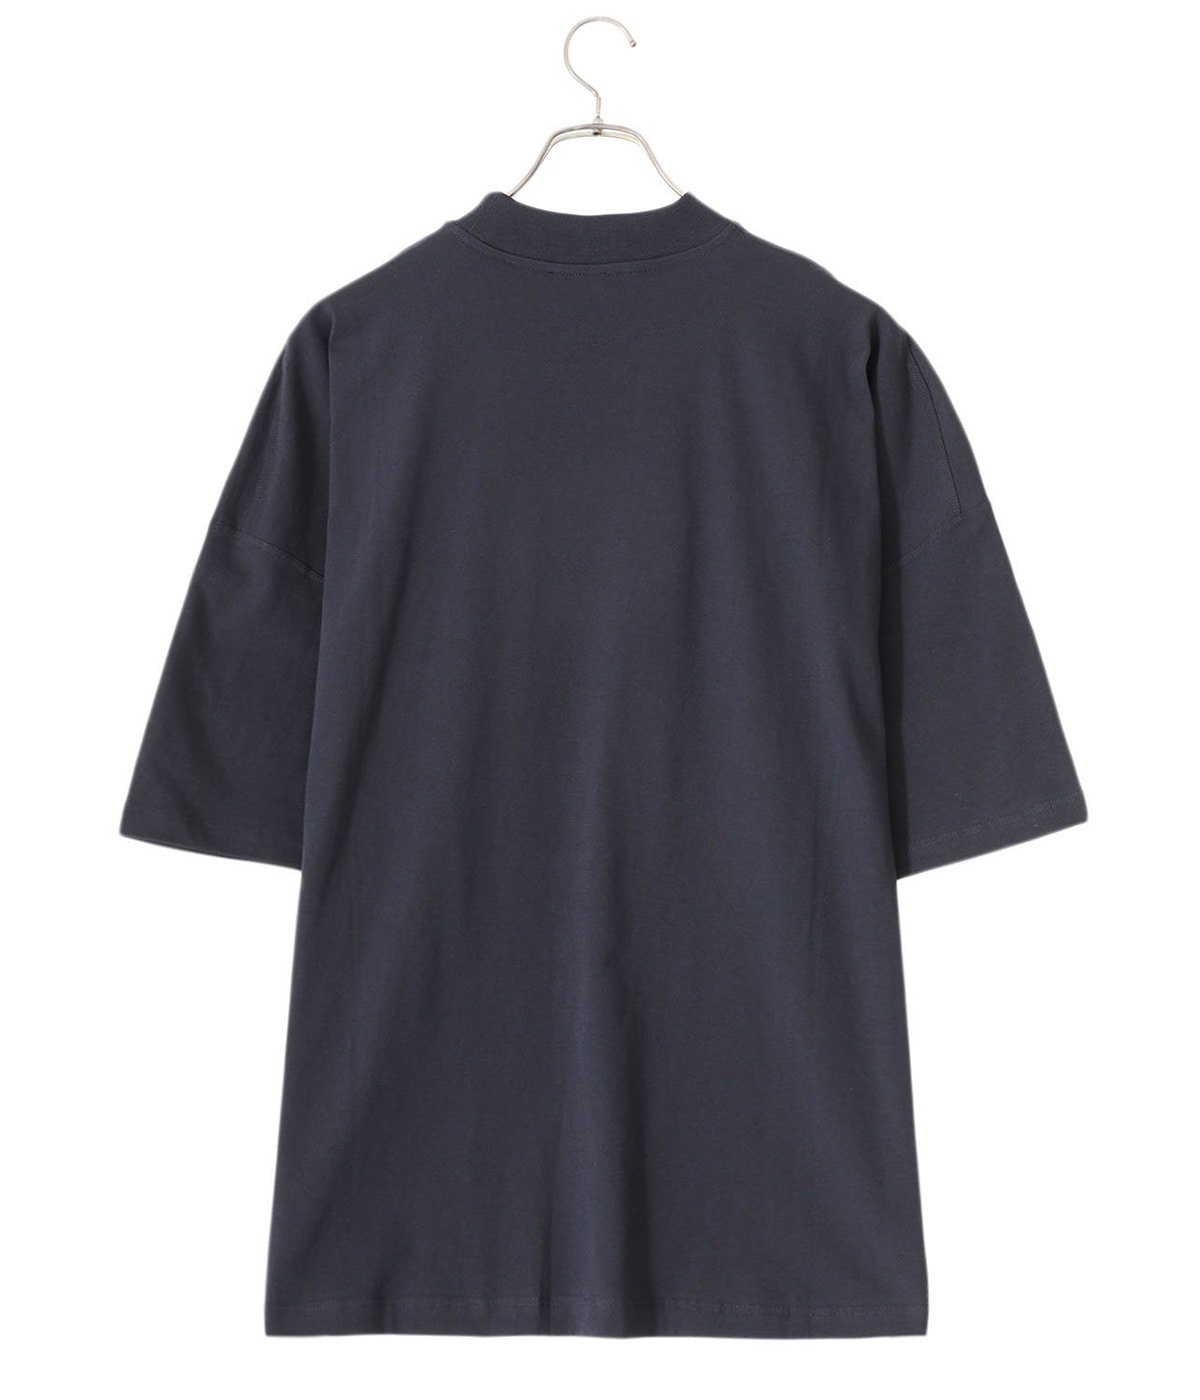 JIL SANDER Tシャツ・カットソー S 白x茶x黒(ボーダー)